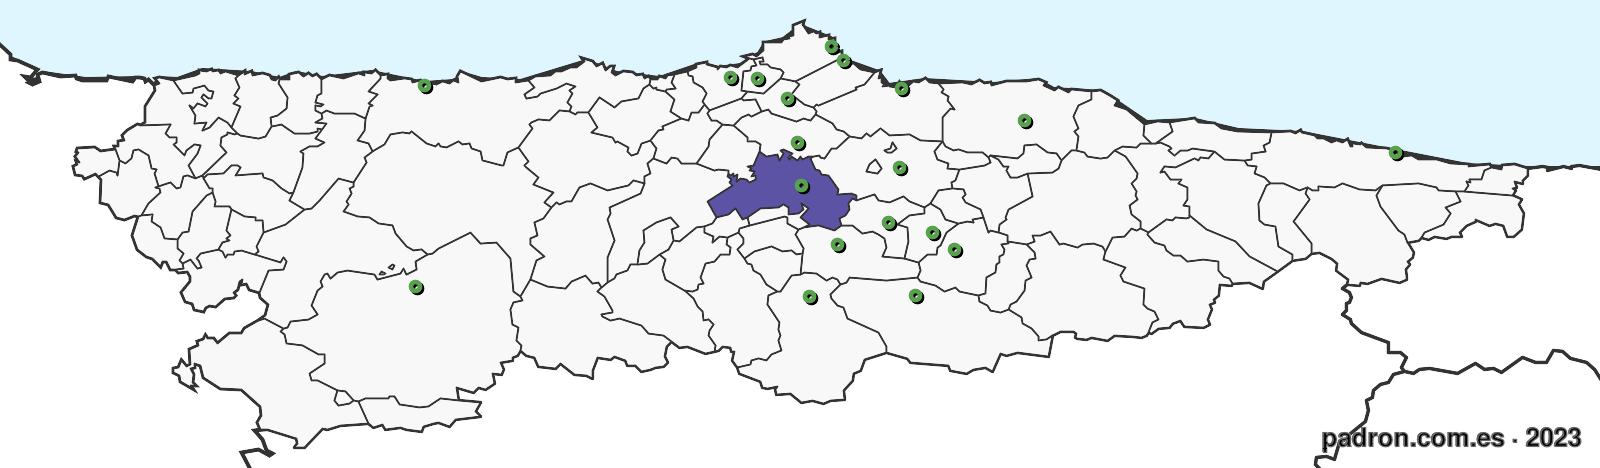 mongoles en asturias.